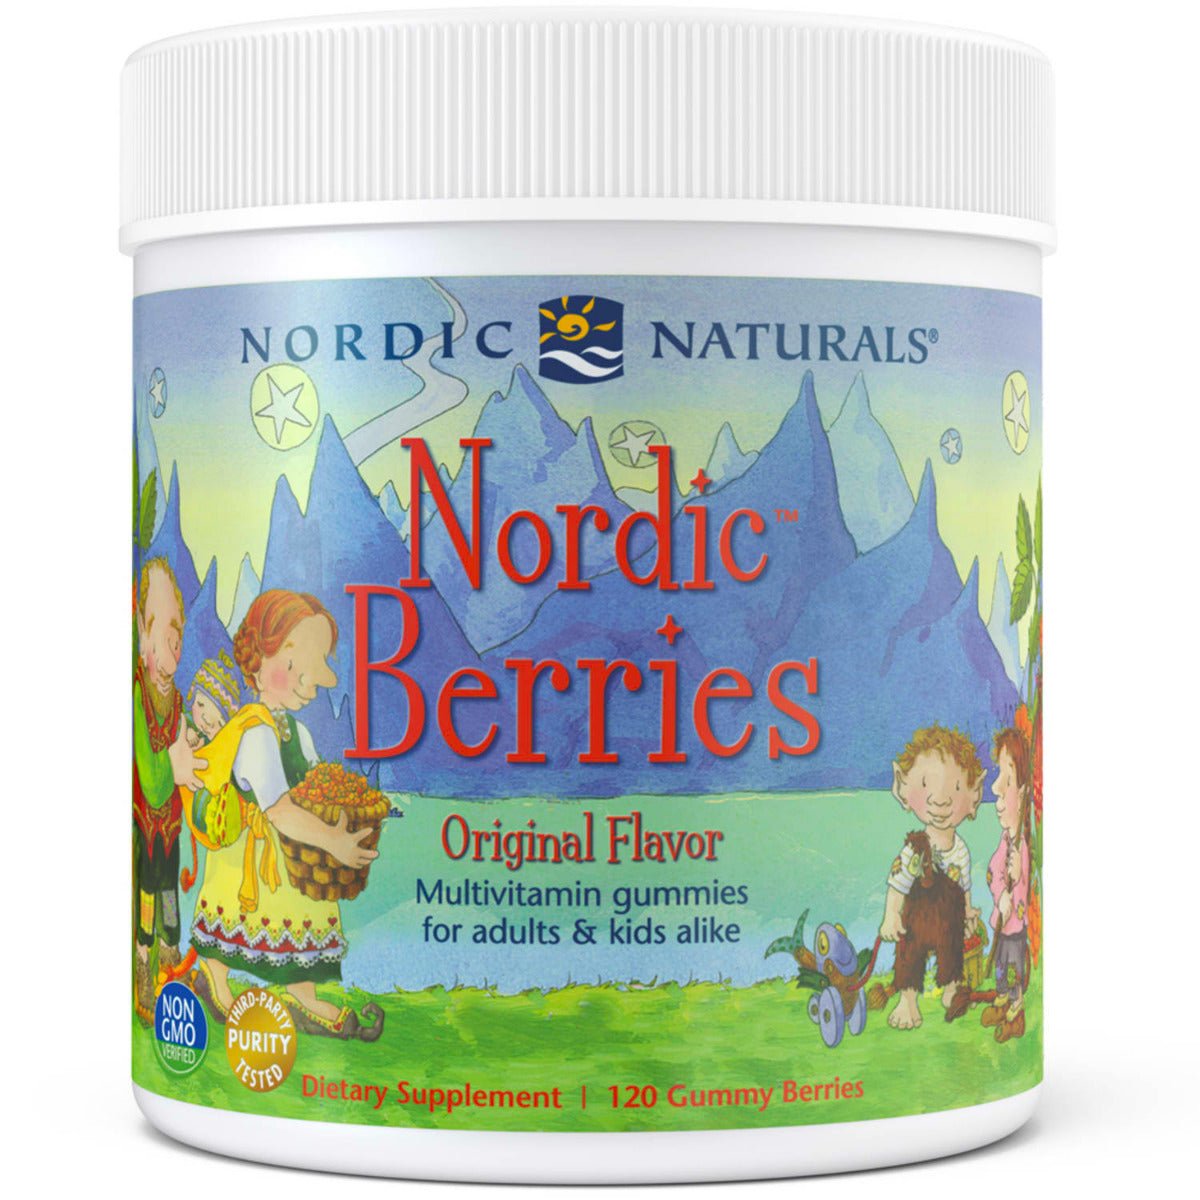 Nordic Berries 120 gummies Cytryna Nordic Naturals Sklep Nordic.pl